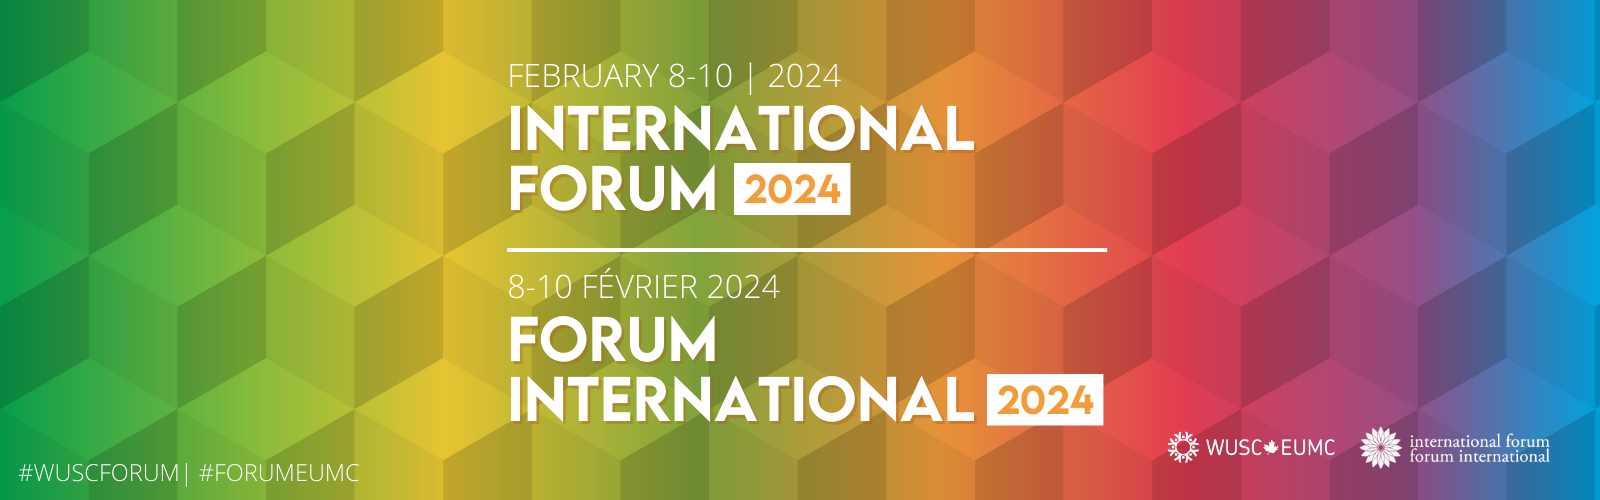 Forum international du 8 au 10 février 2024